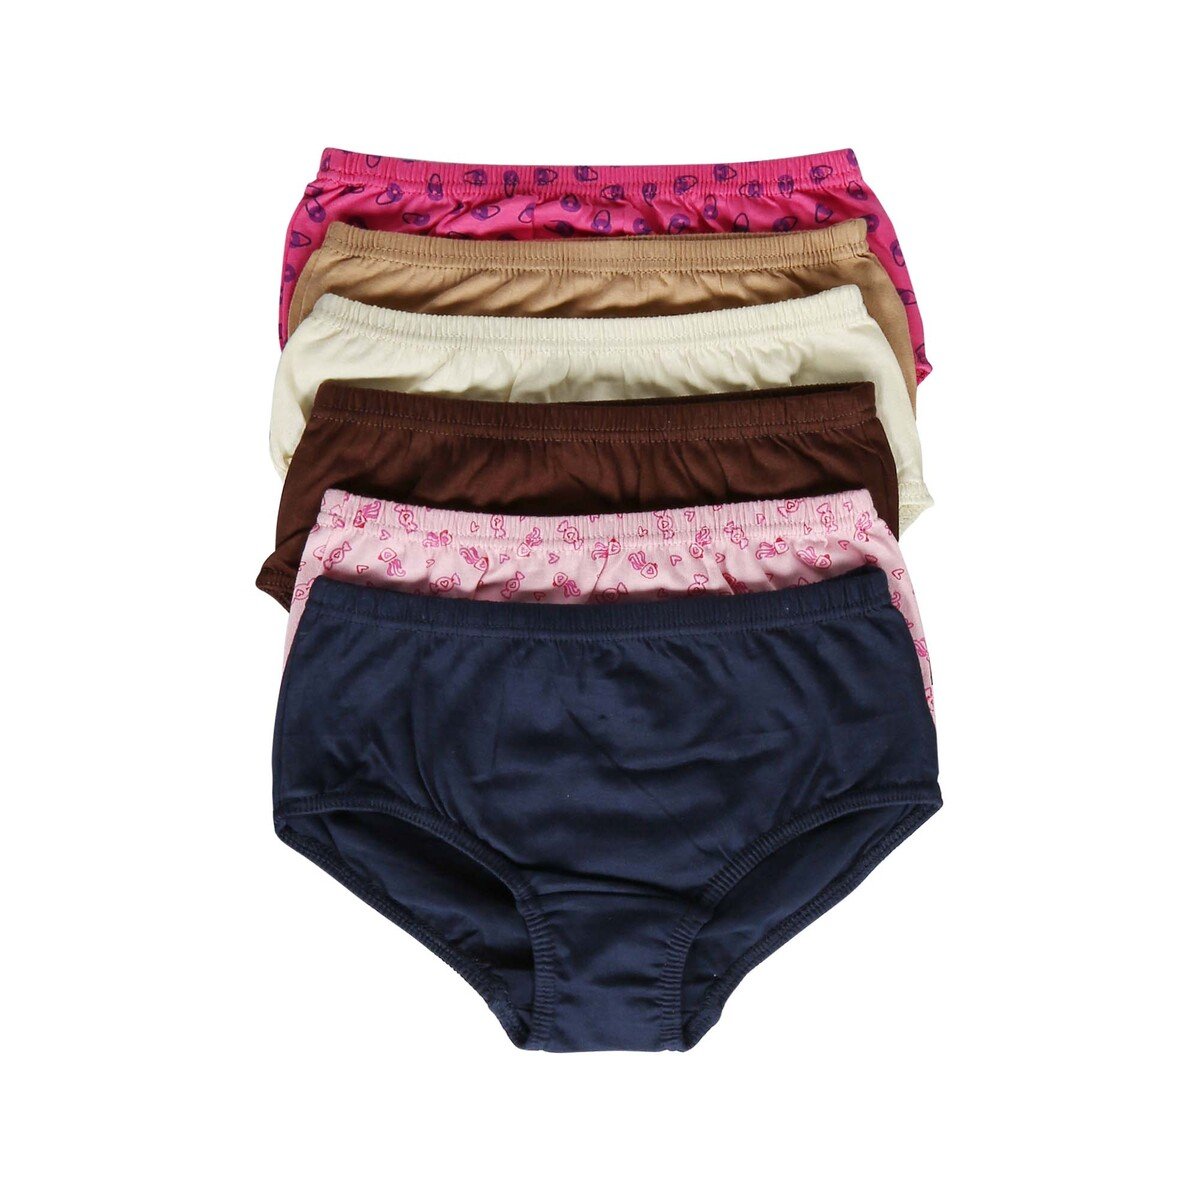 Debackers Girl Panty Assorted Colors Pack of 6 FM52017 9-10Y